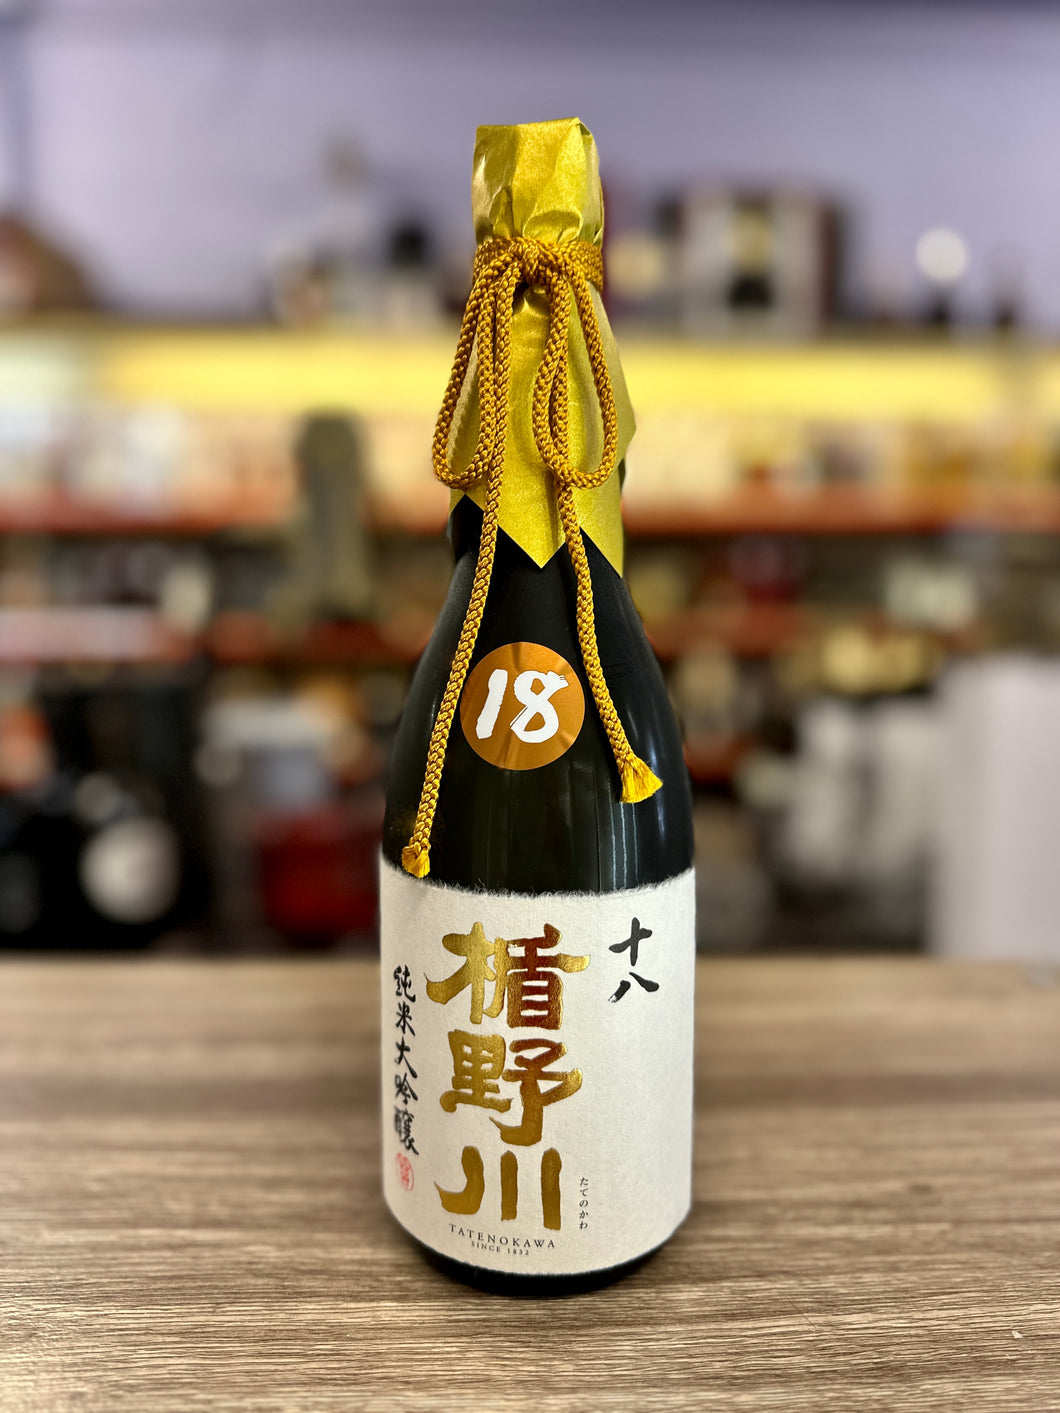 Tatenokawa 18 Junmai Daiginjo Sake, 720 ml